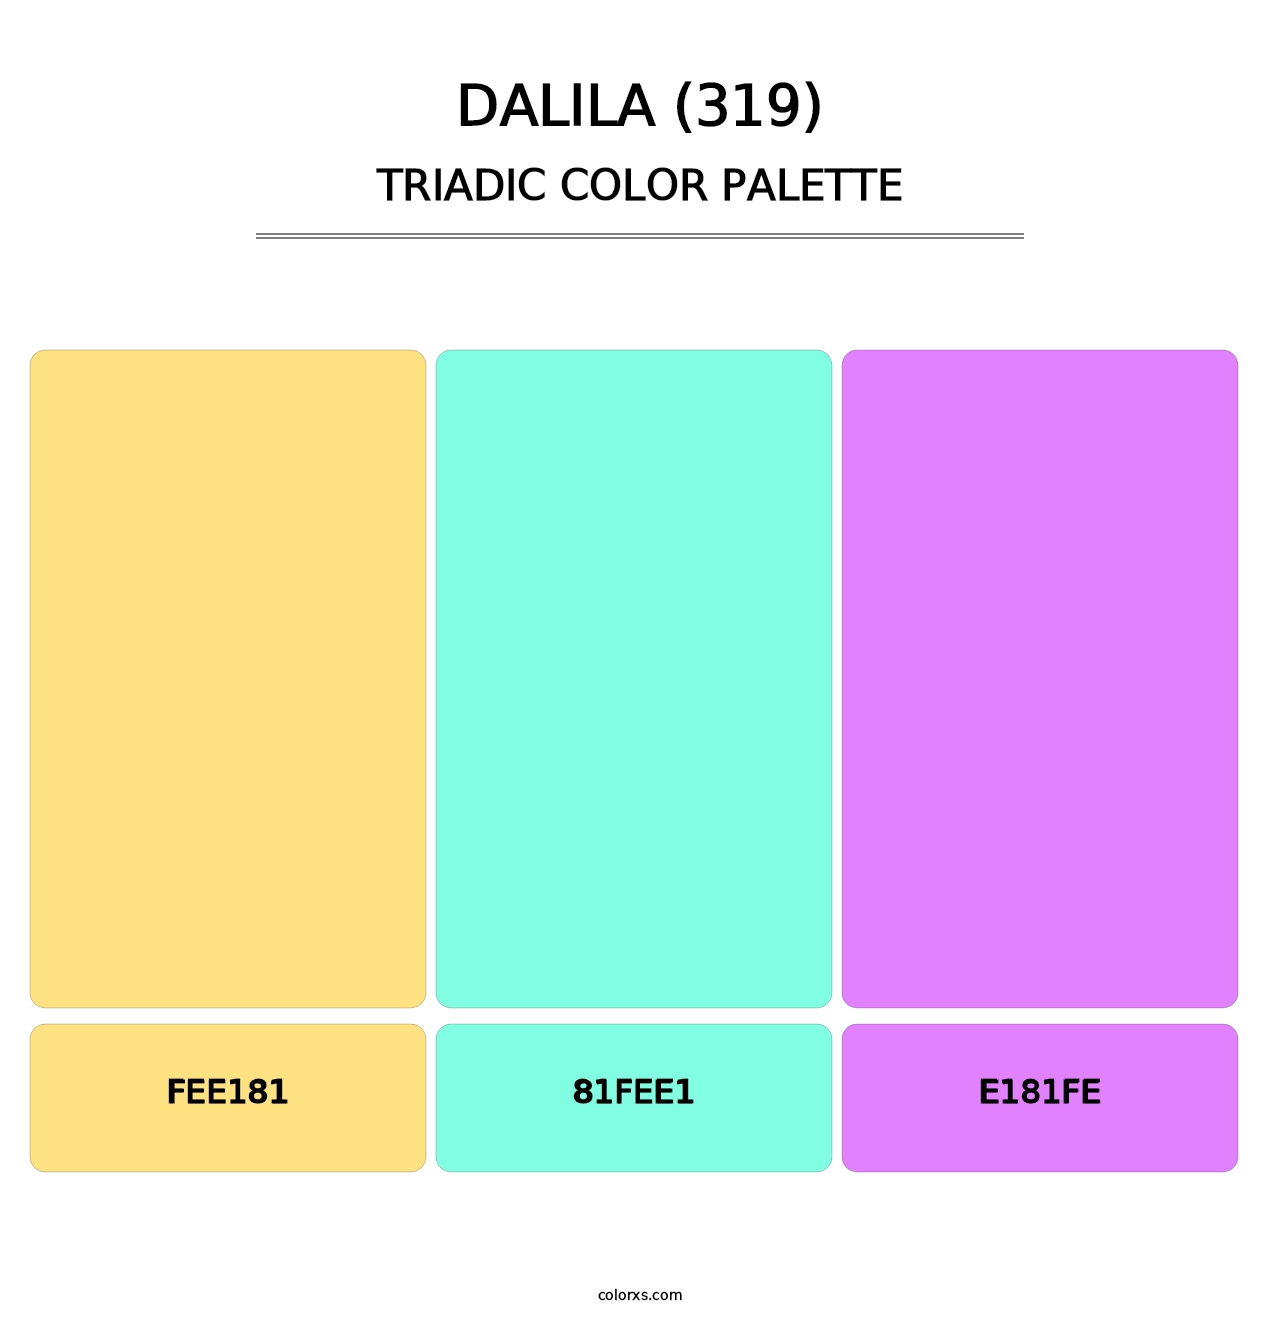 Dalila (319) - Triadic Color Palette